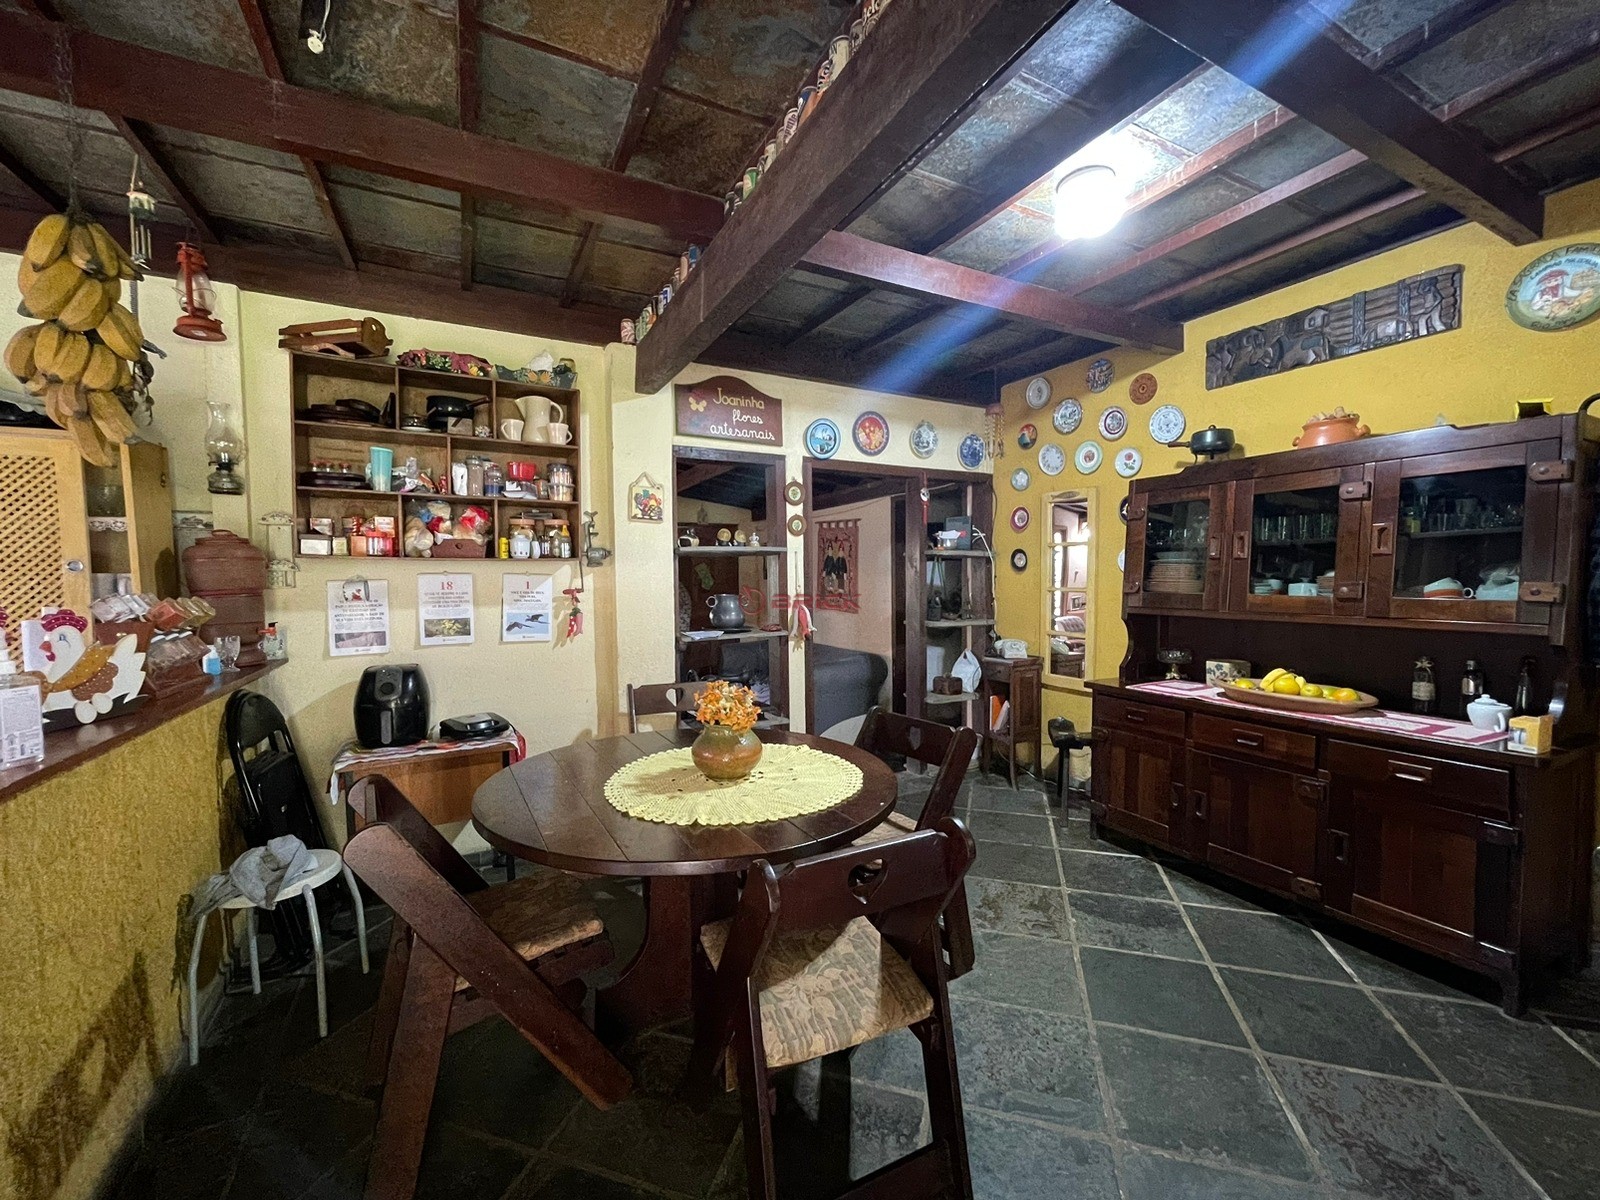 Casa à venda em Iucas, Teresópolis - RJ - Foto 5